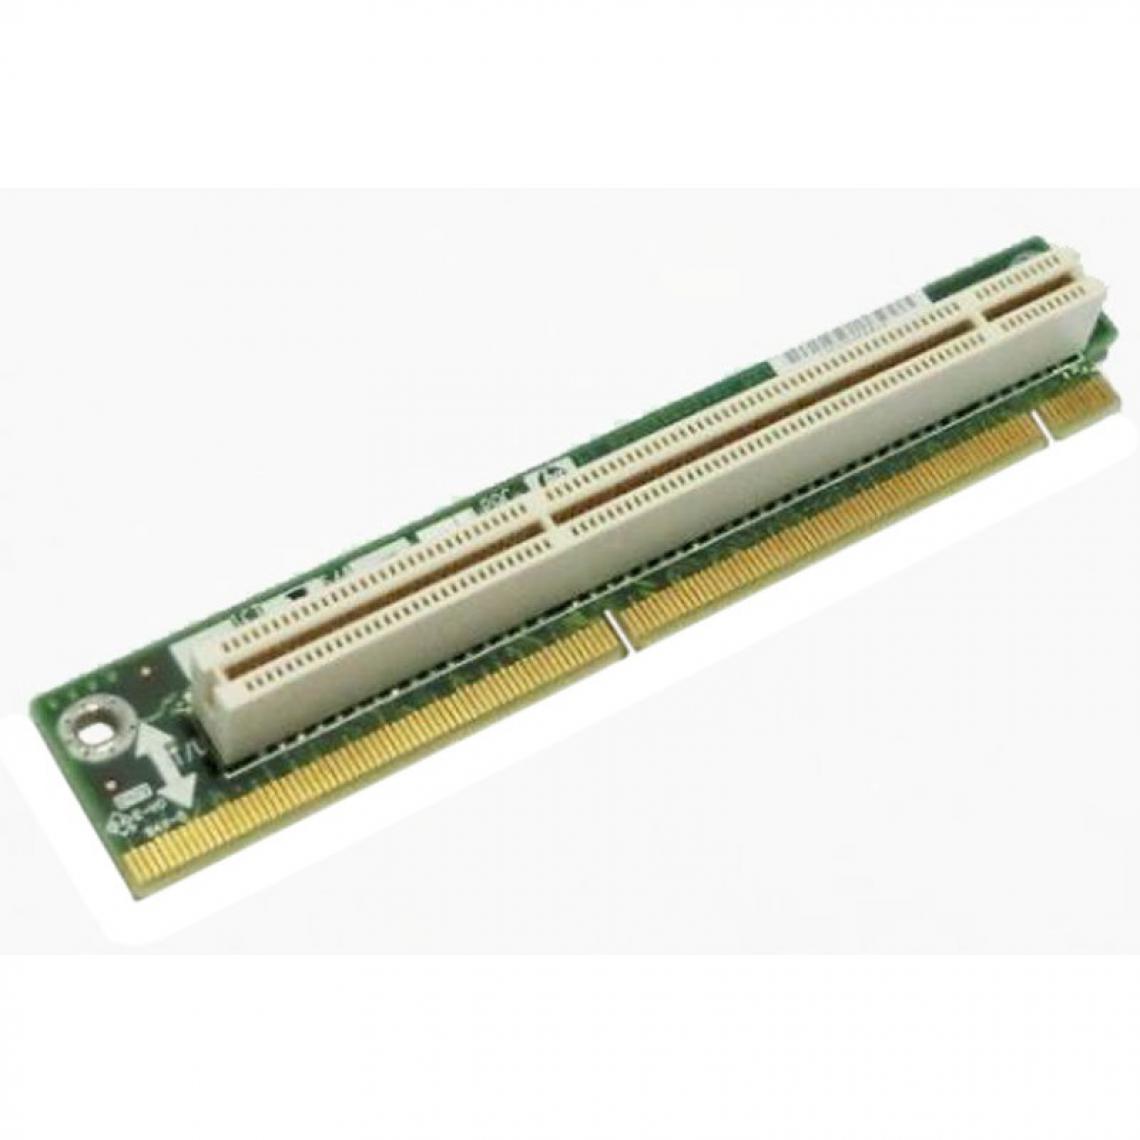 Hp - Carte PCI-X Riser Card HP 361387-001 WF3604007001 6042A0020501 ProLiant DL360 G4 - Carte Contrôleur USB